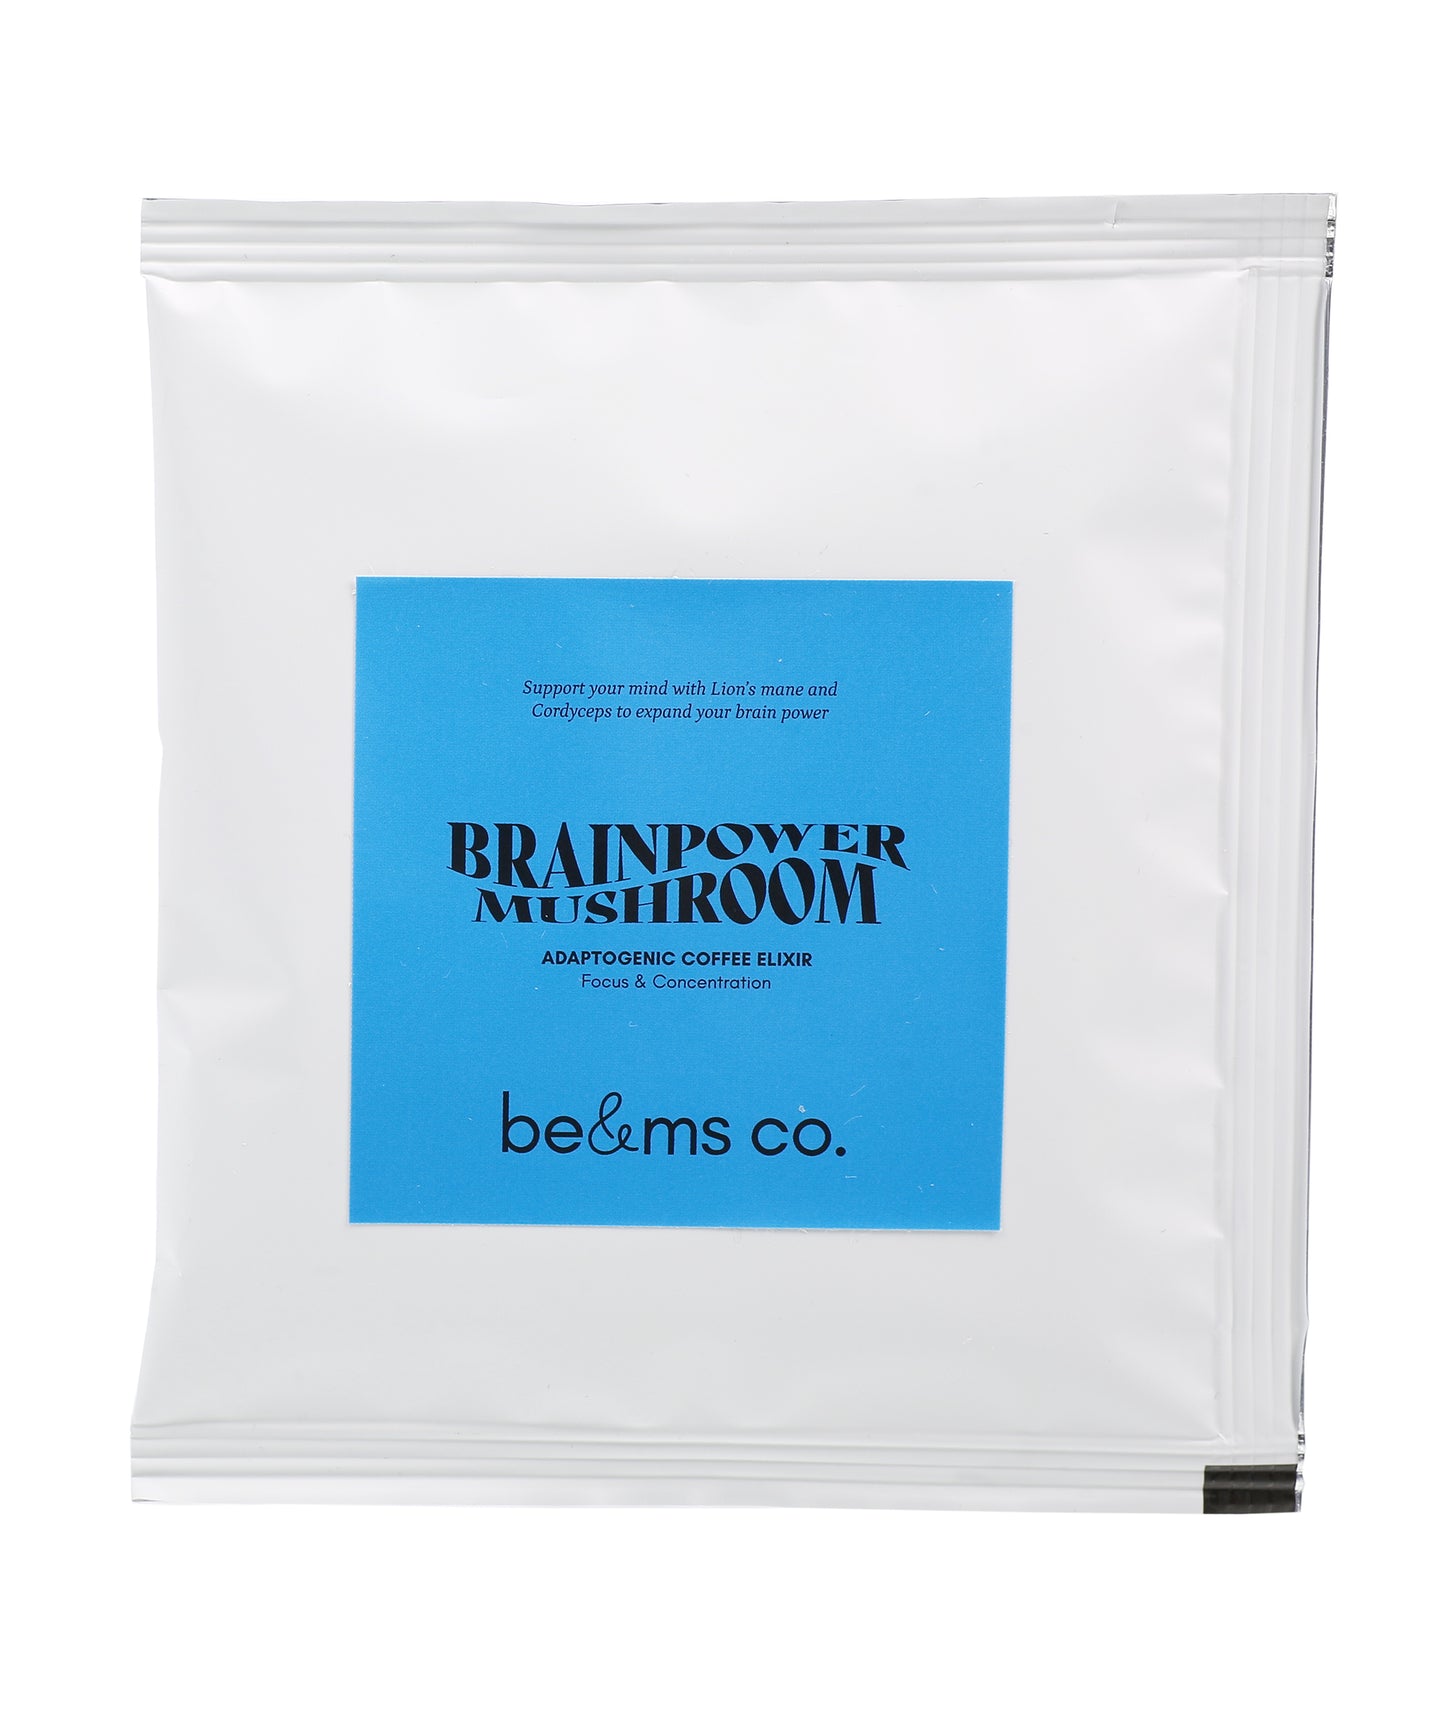 Brain Power Coffee Bags with Lion's Mane and Cordyceps Mushrooms